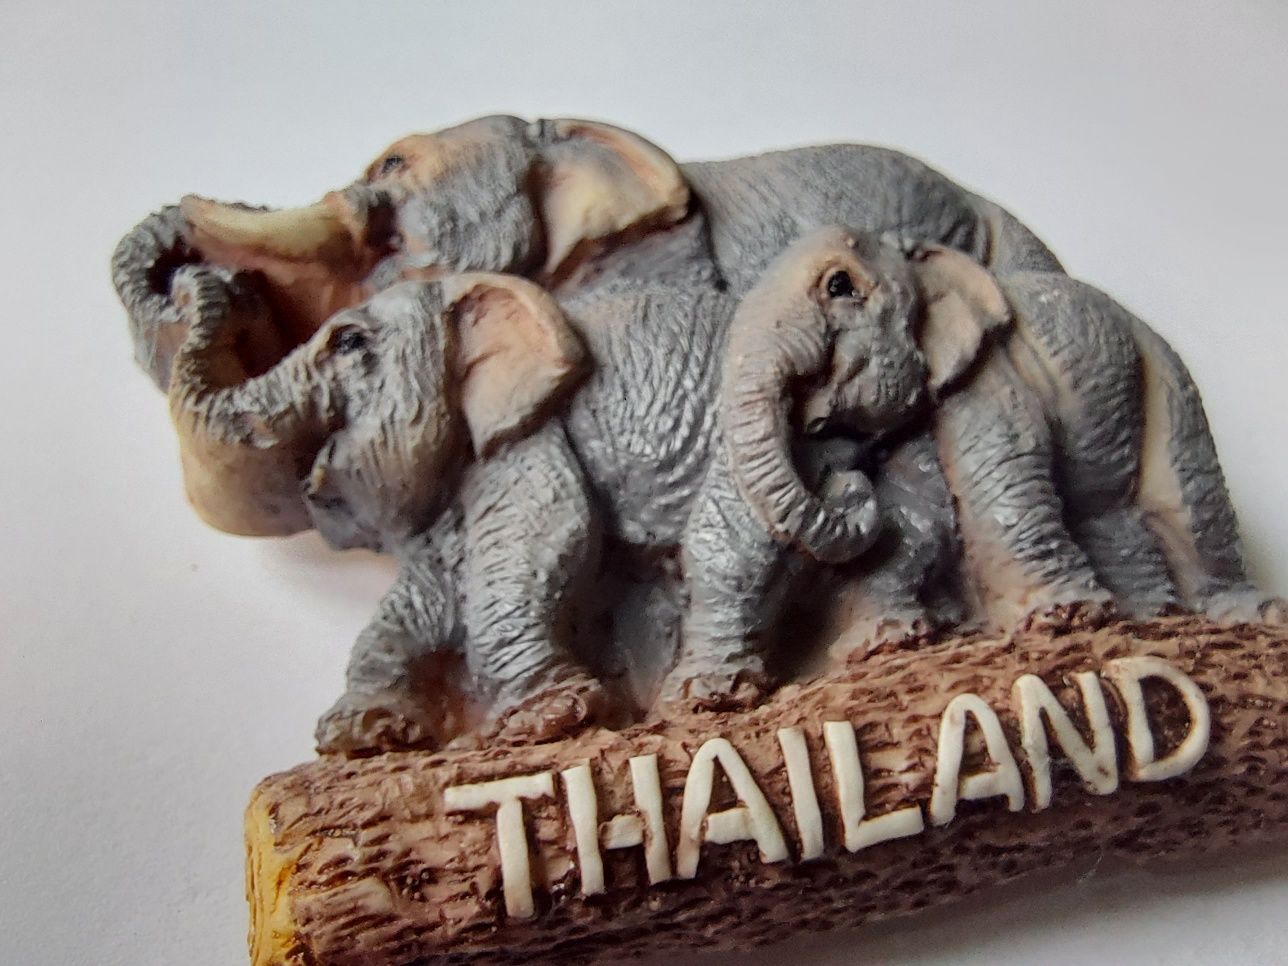 Thailand_2 (magnes na lodówkę)